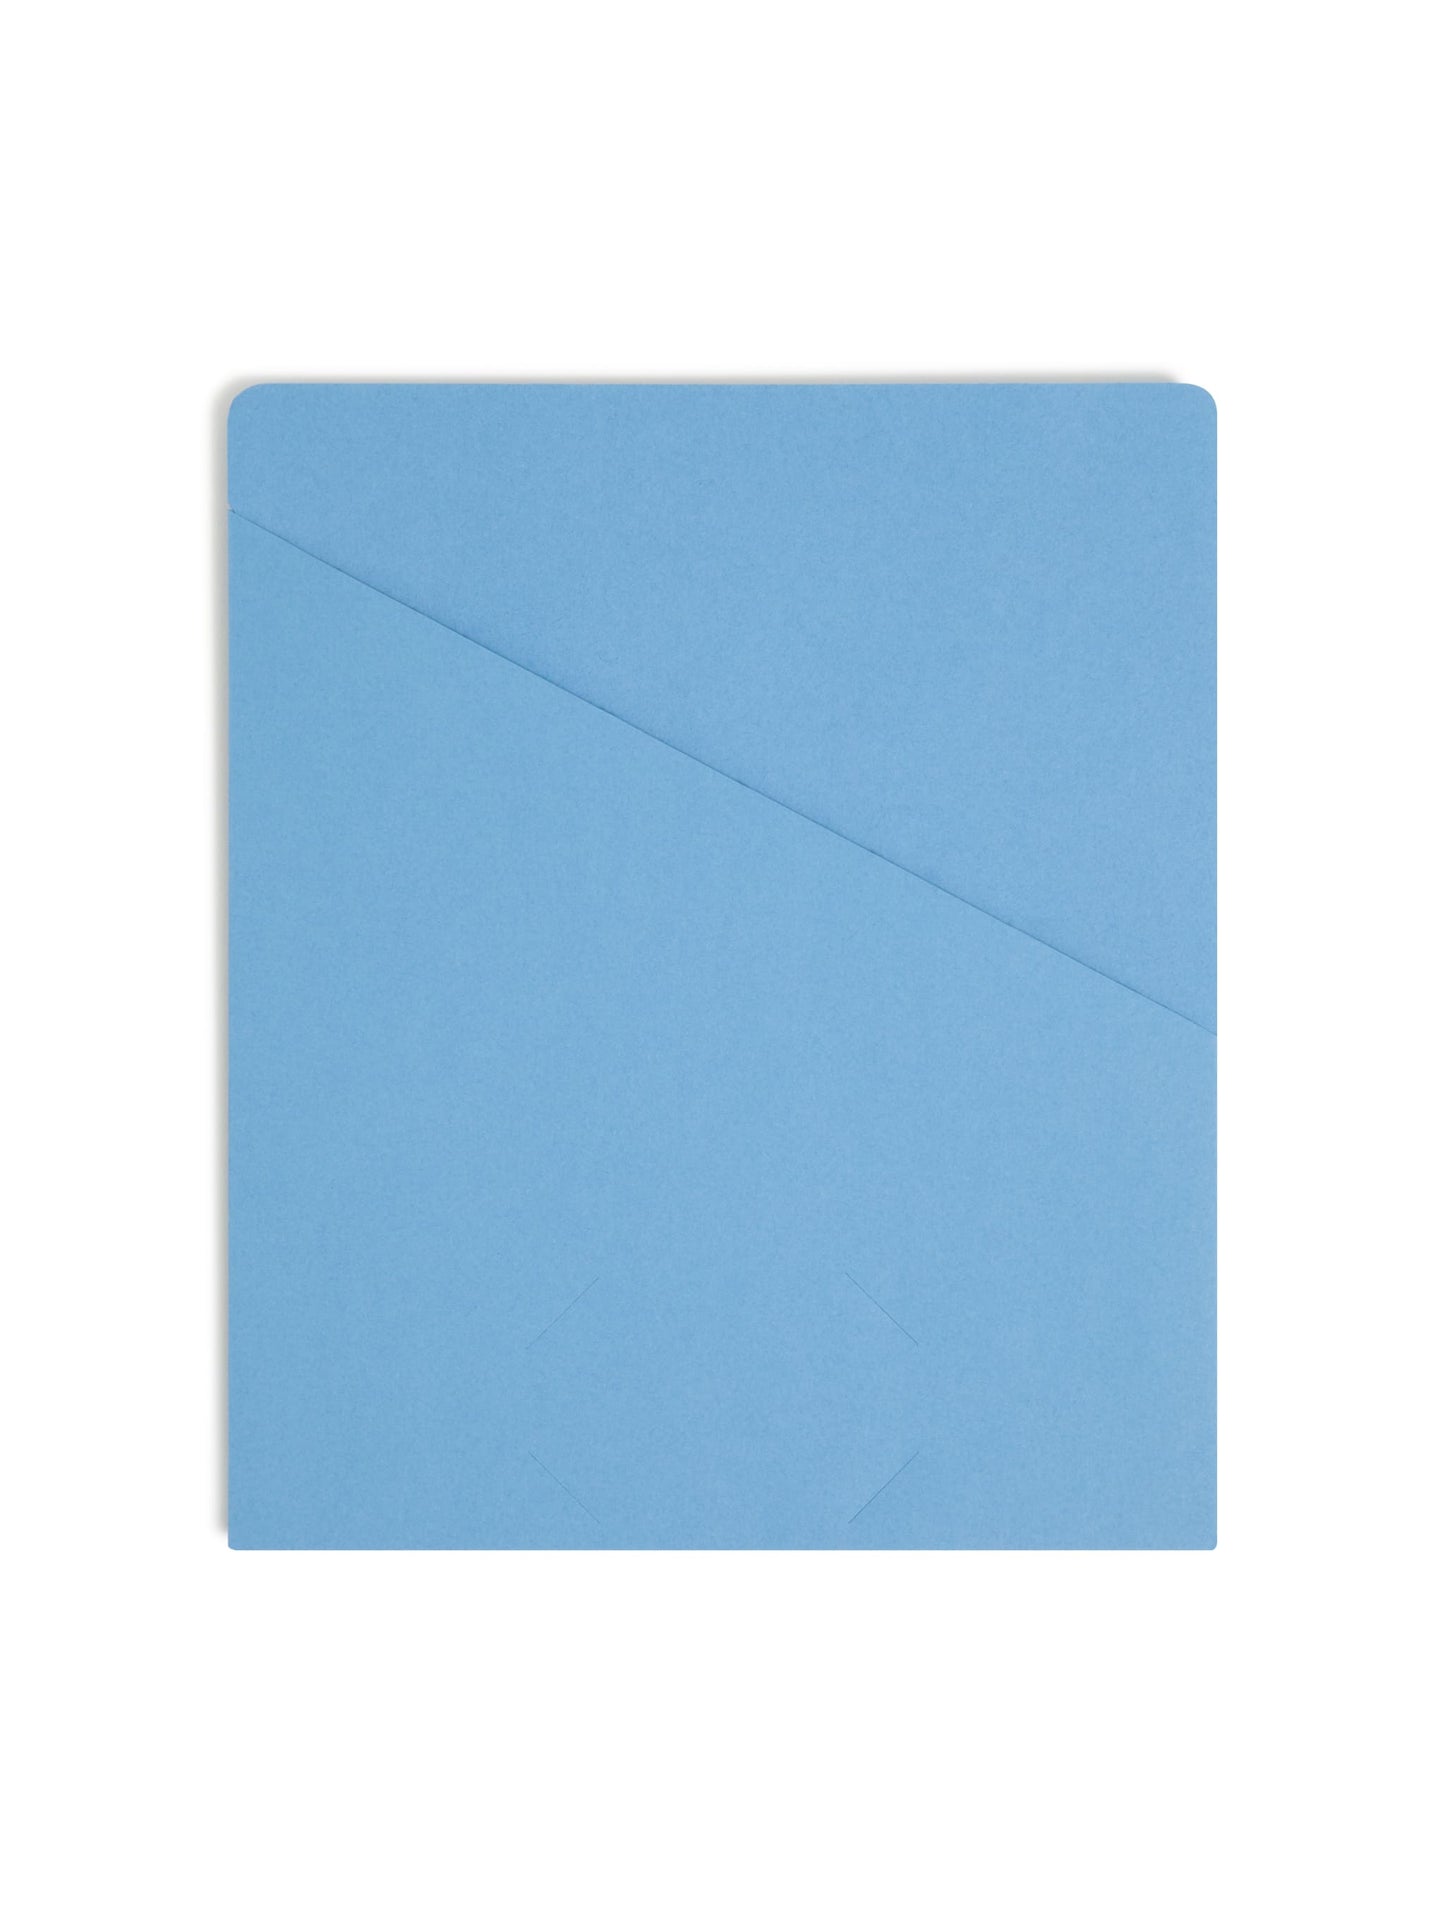 Organized Up® Slash Jackets, Flat-No Expansion, Blue Color, Letter Size, Set of 1, 086486754316